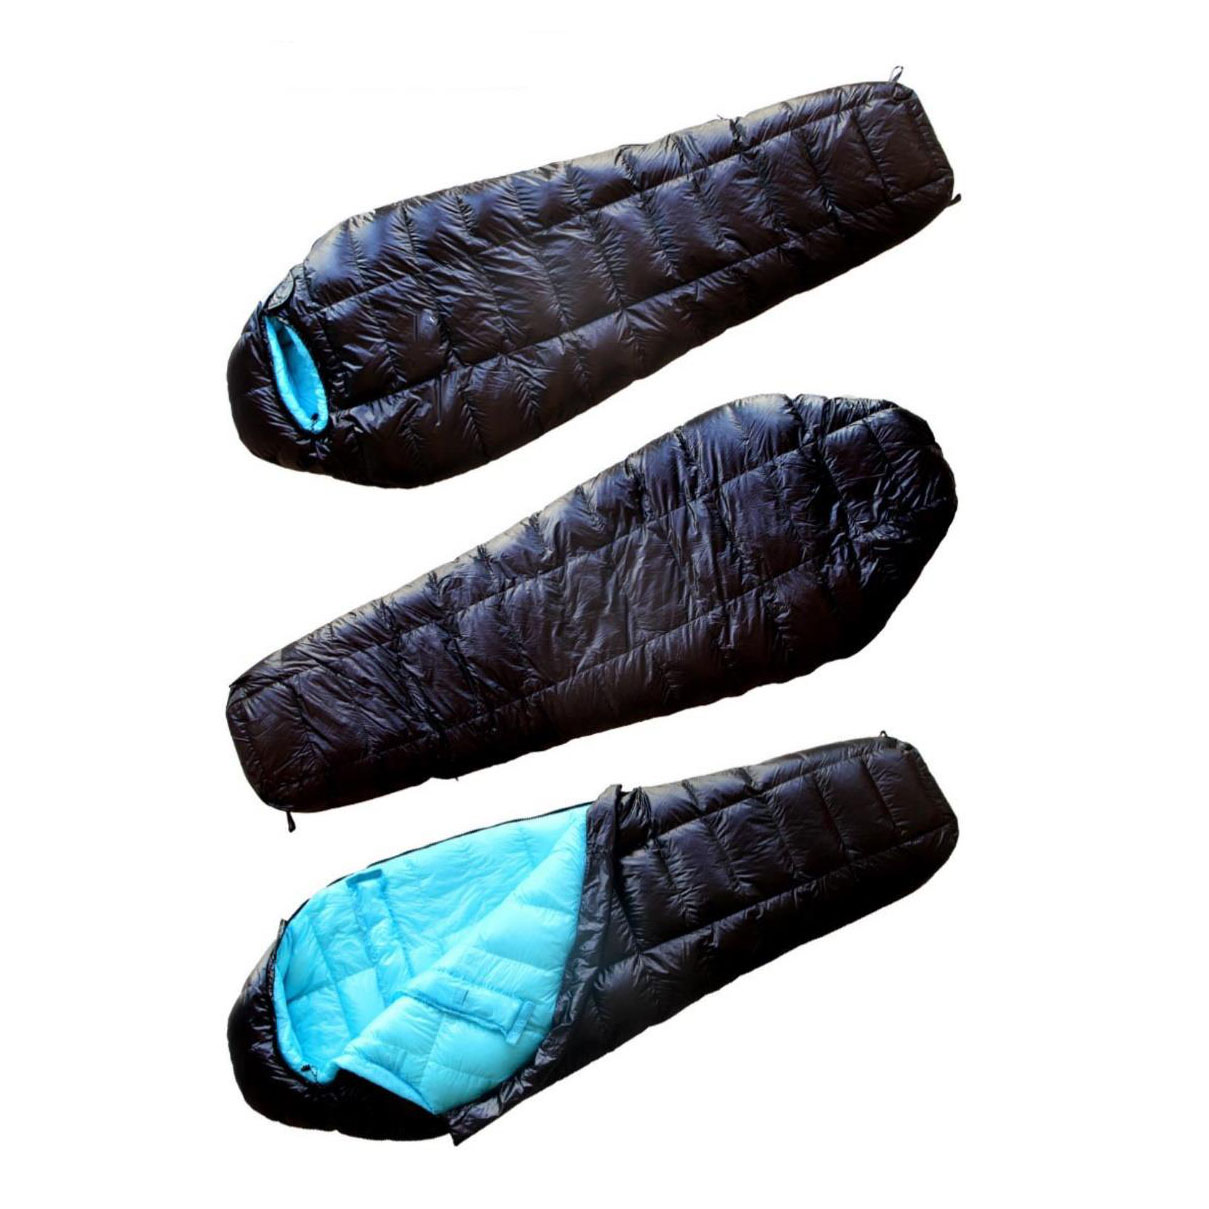 Superlight Waterproof Sleeping Bag Featured Image